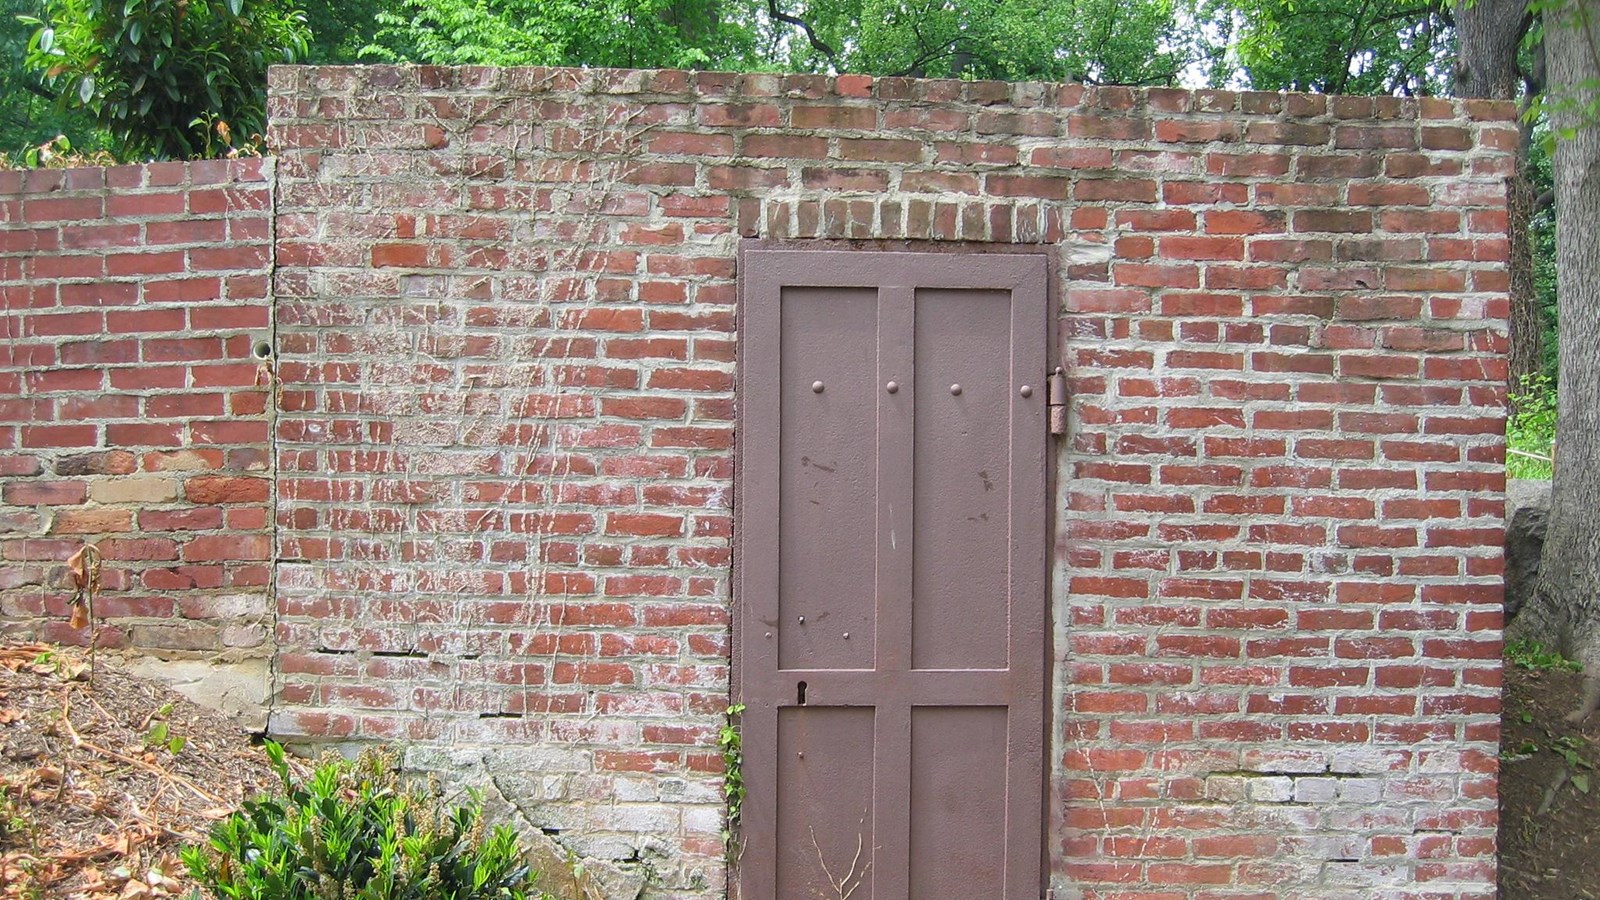 A plain brick wall with a brown metal door